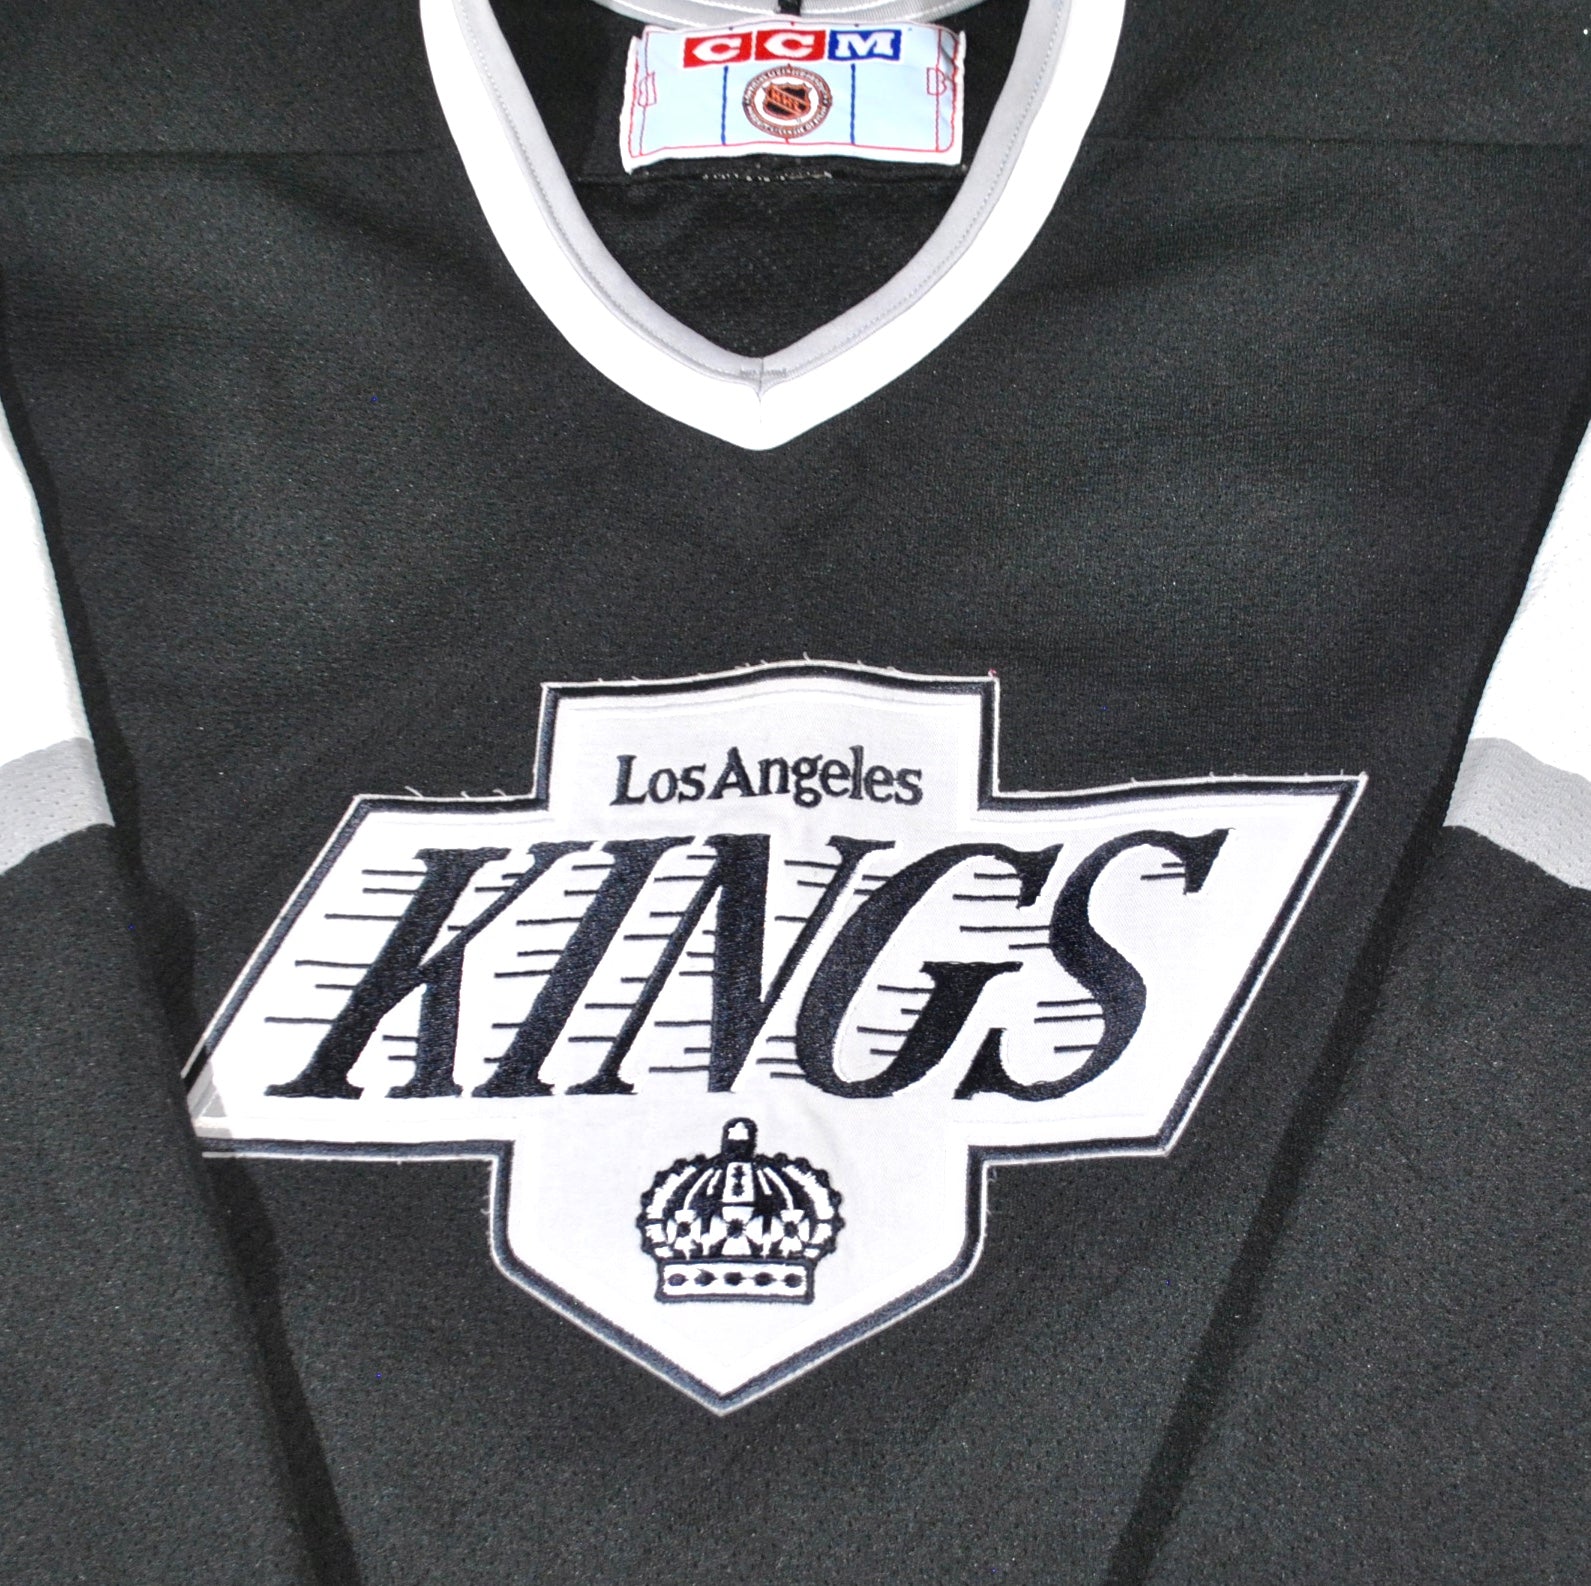 LA Kings Game worn jersey collectors